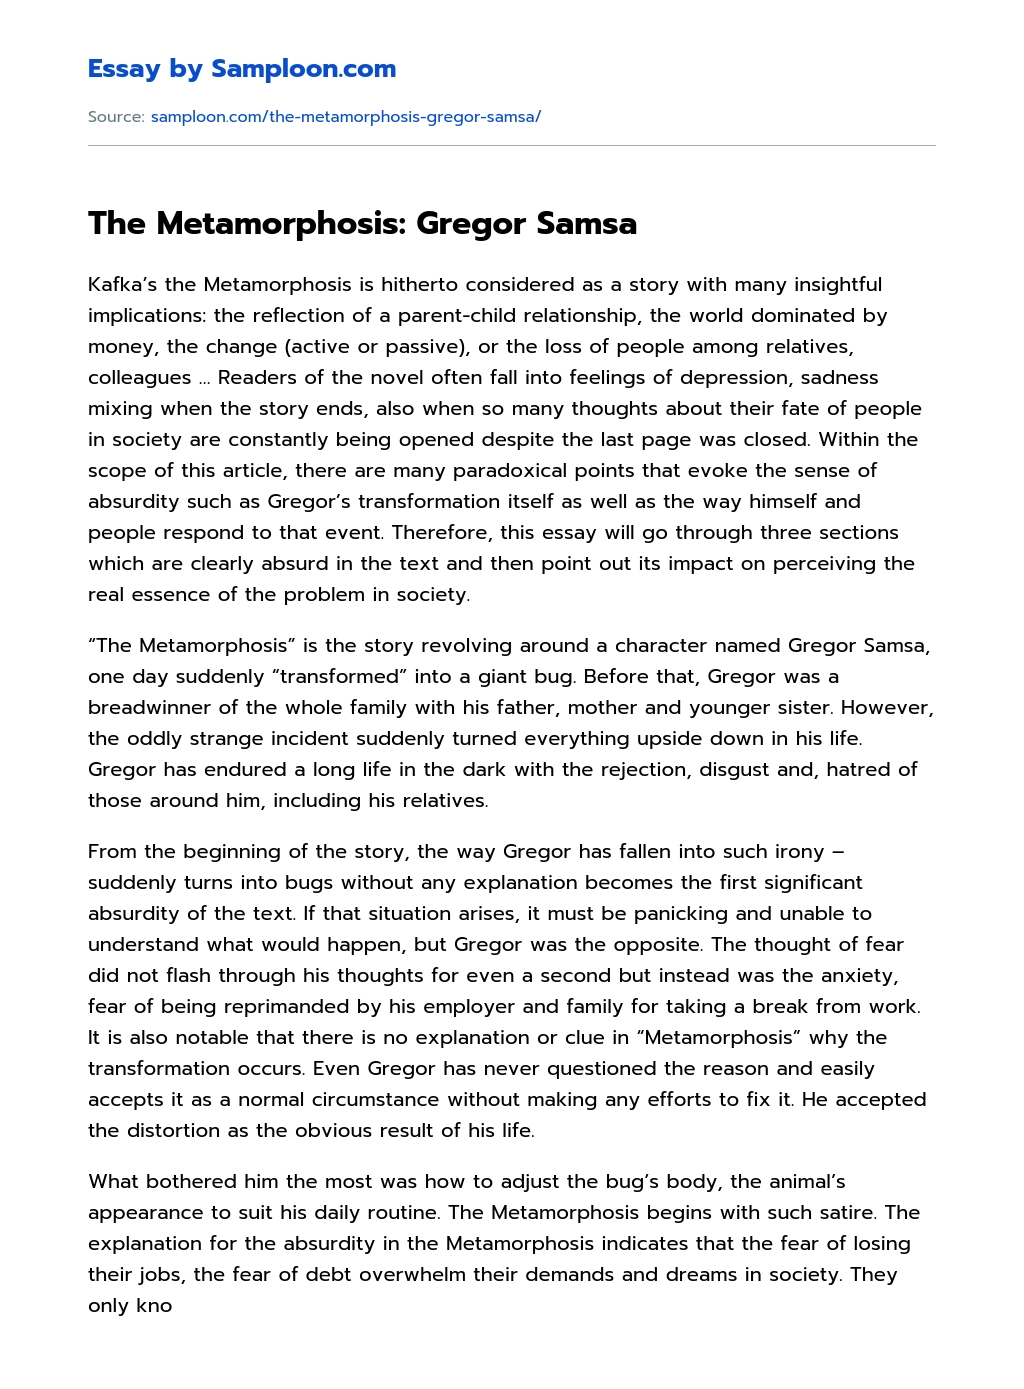 The Metamorphosis: Gregor Samsa essay